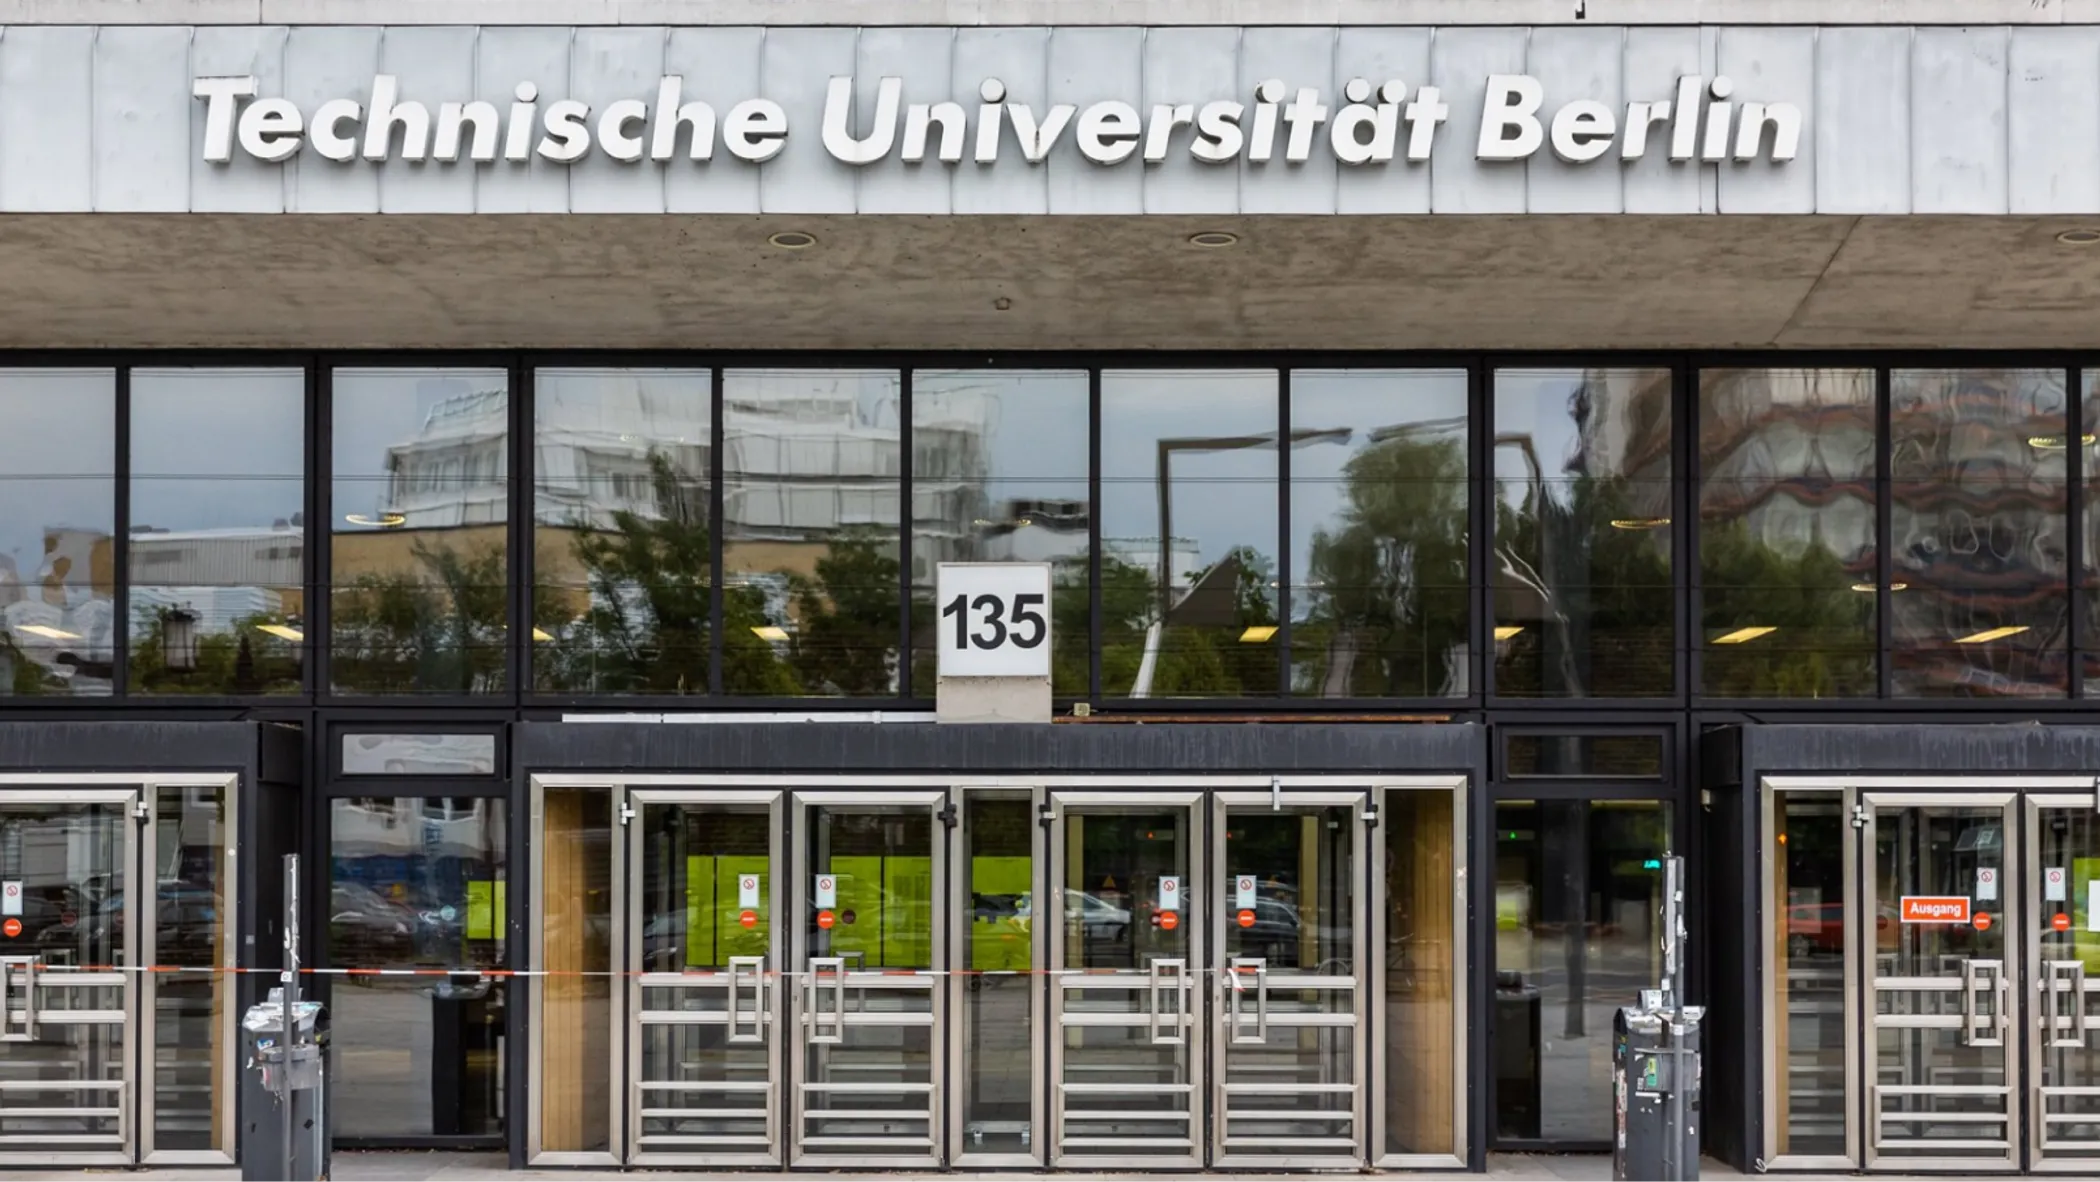 Facebook: Technische Universität Berlin